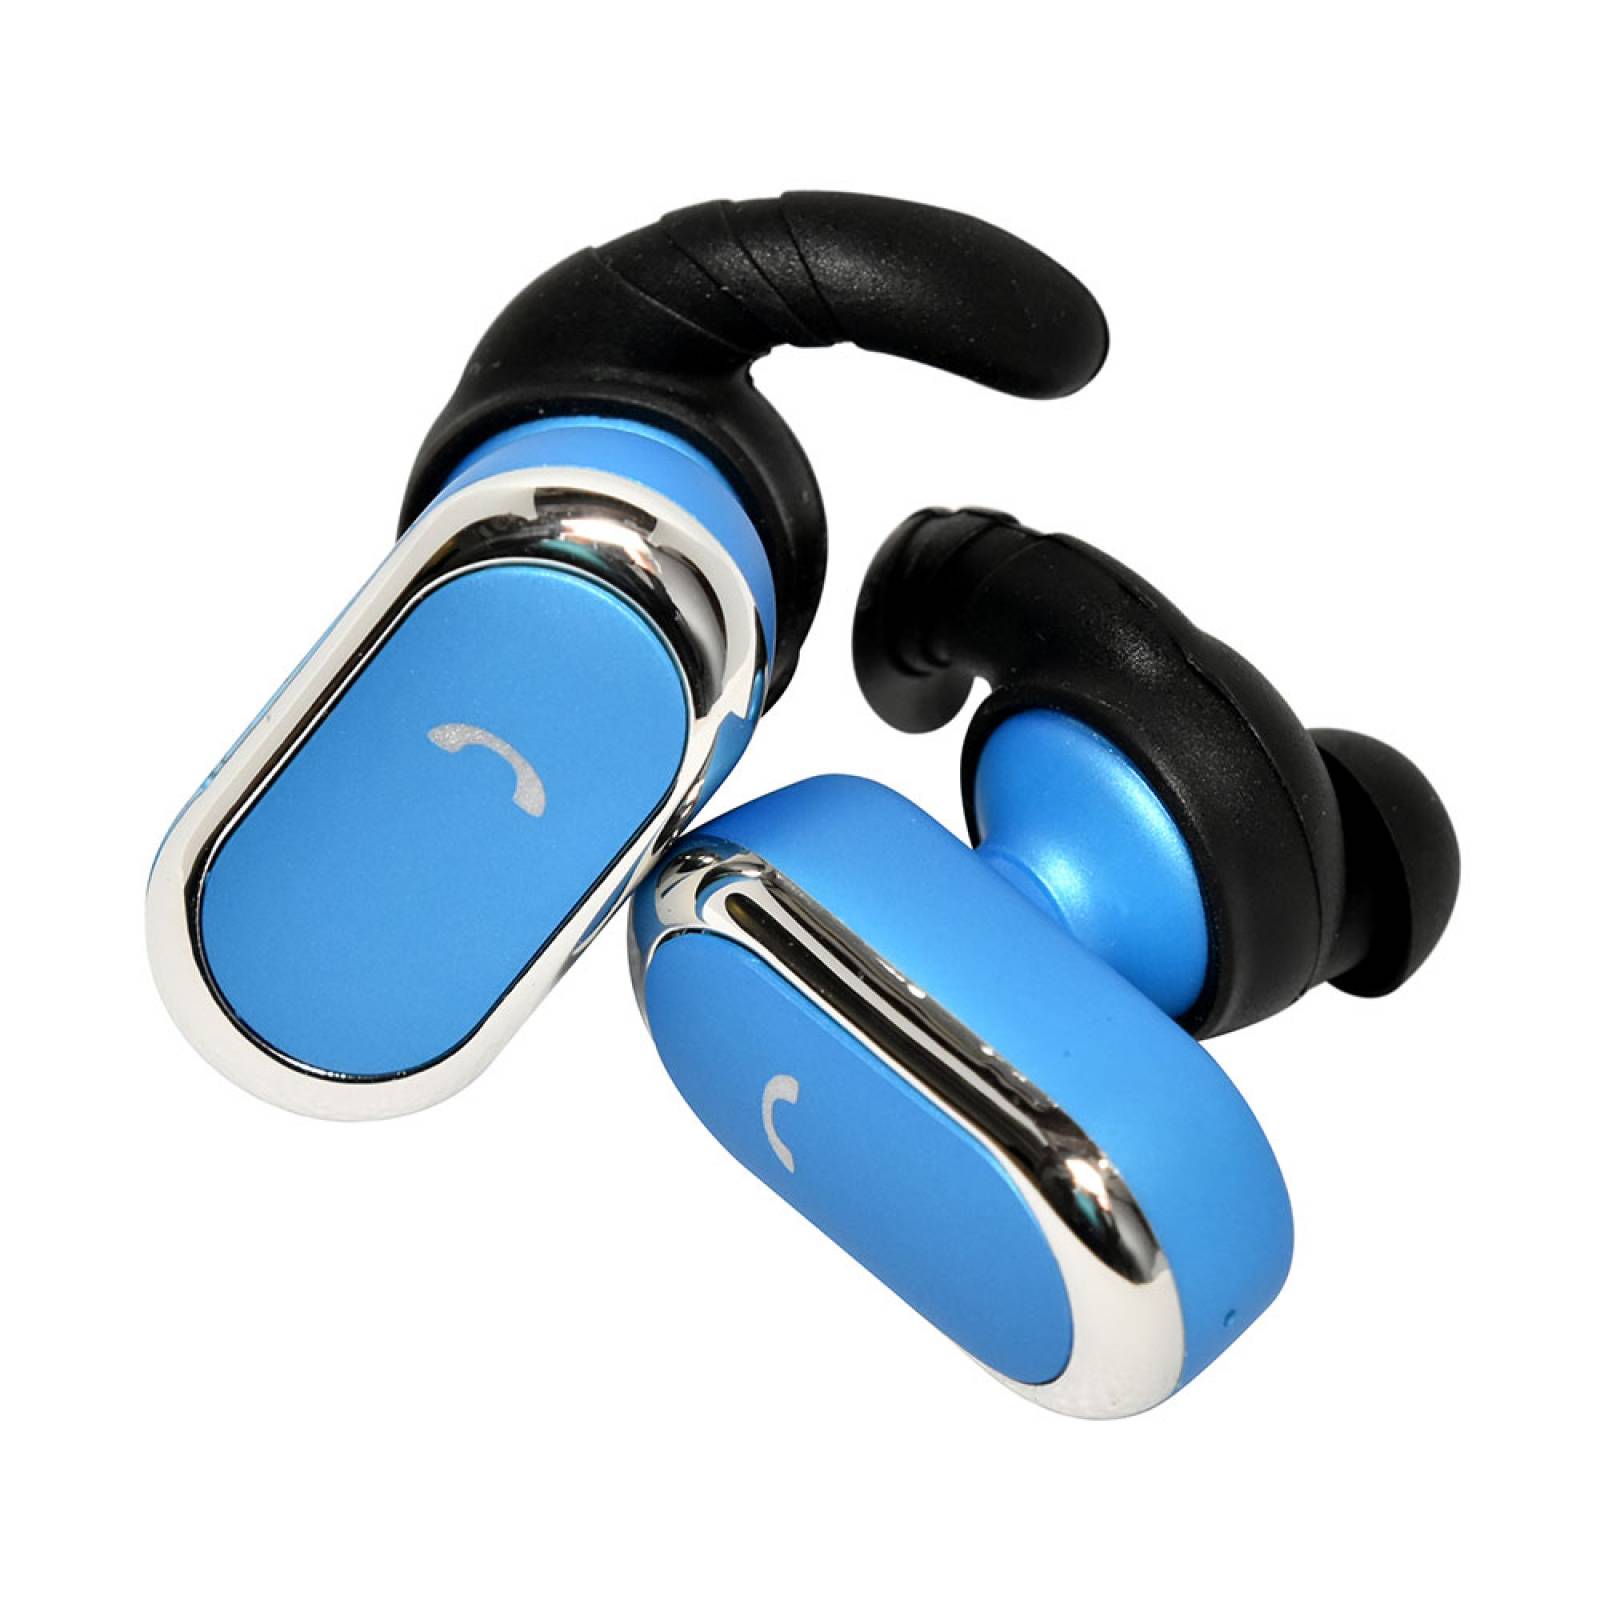 Audifonos Inalambricos Bluetooth 4.2 Cargador Incluido Lalur